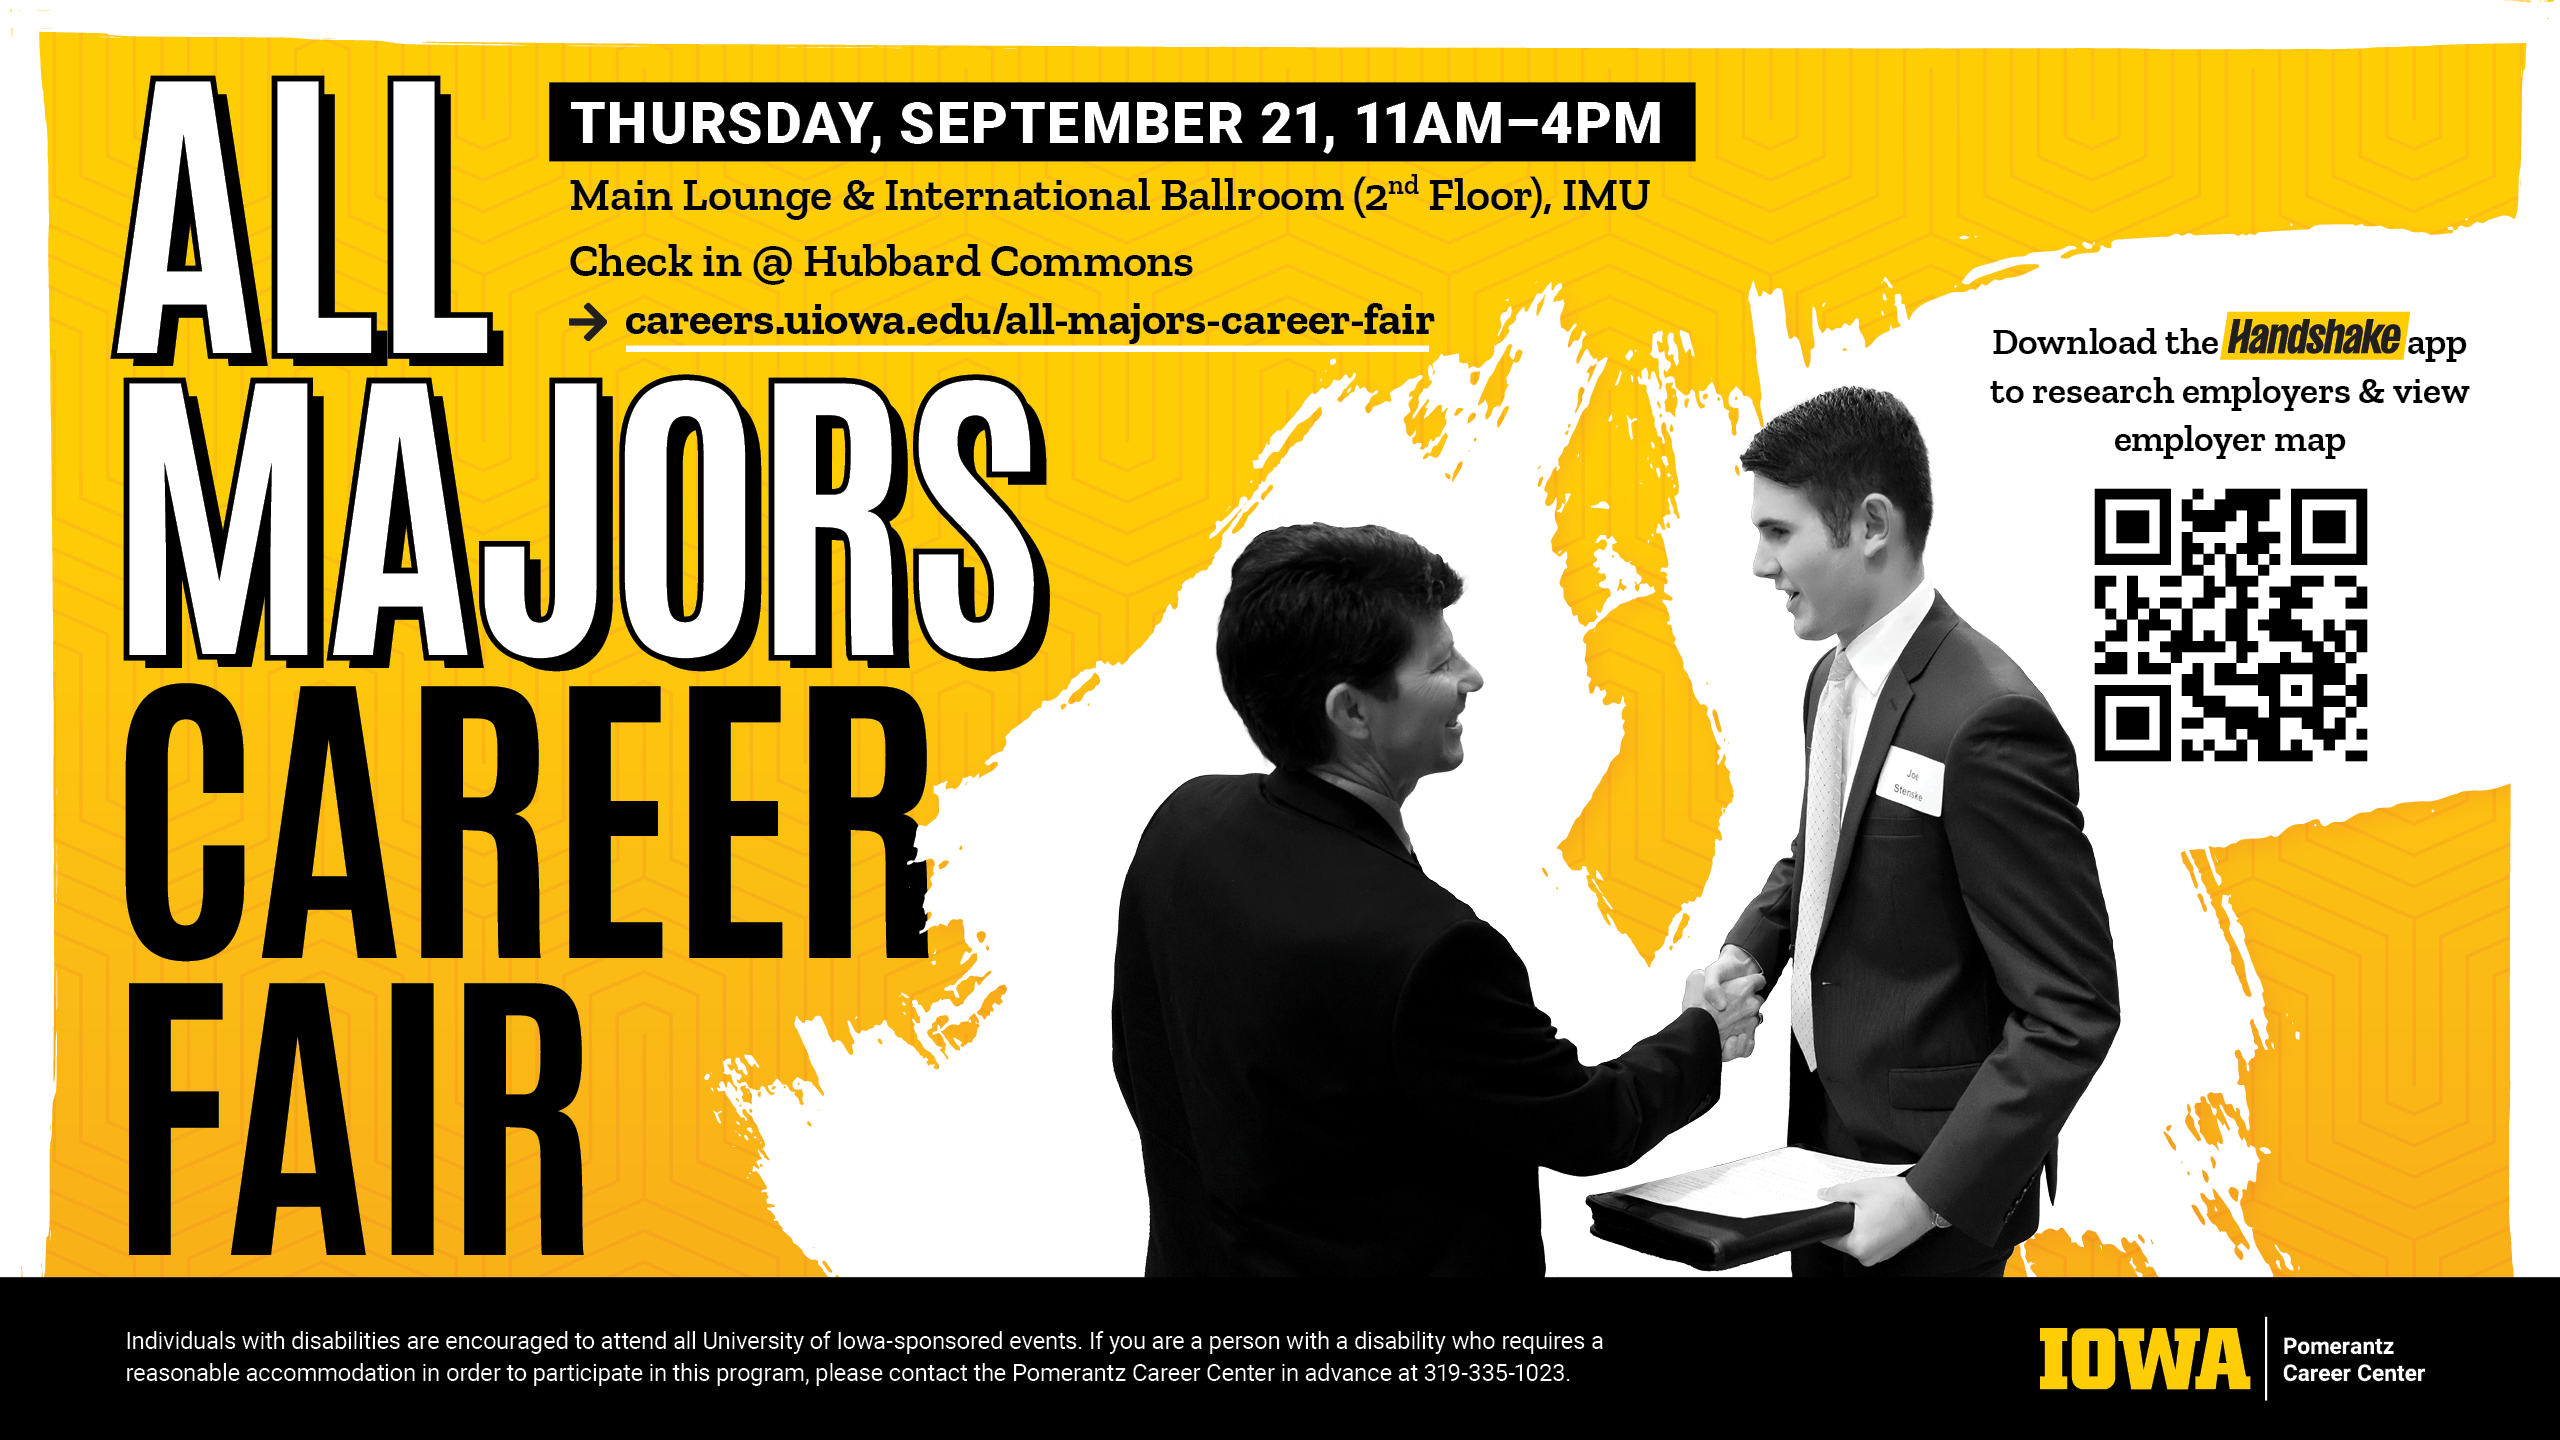 All Majors Career Fair, Thursday September 21 from 11 a.m.-4 p.m. at the IMU